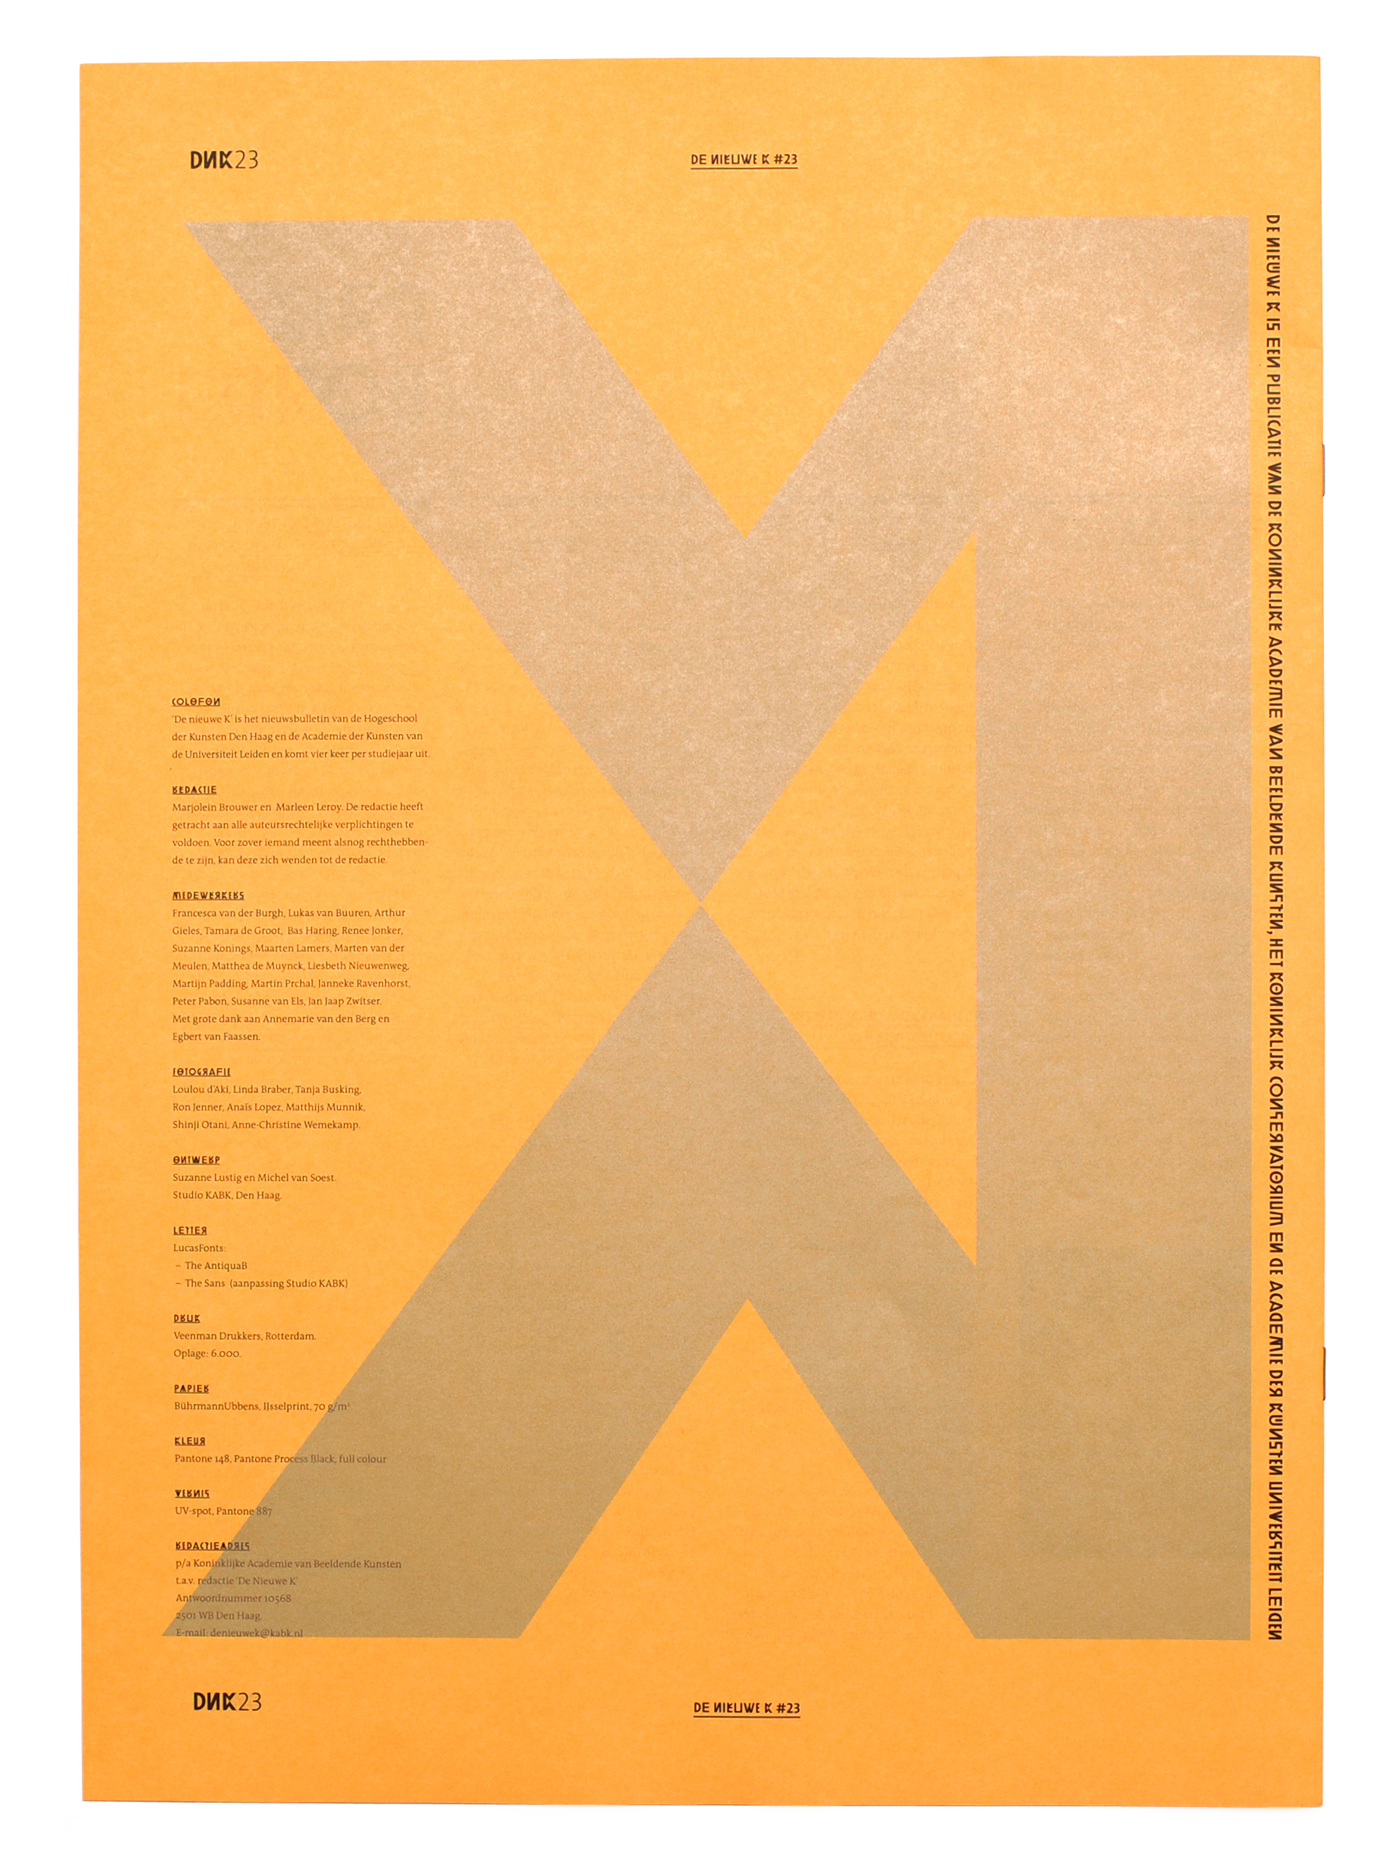 kabk royal academy art offset type design spot varnish pantone metallic paper